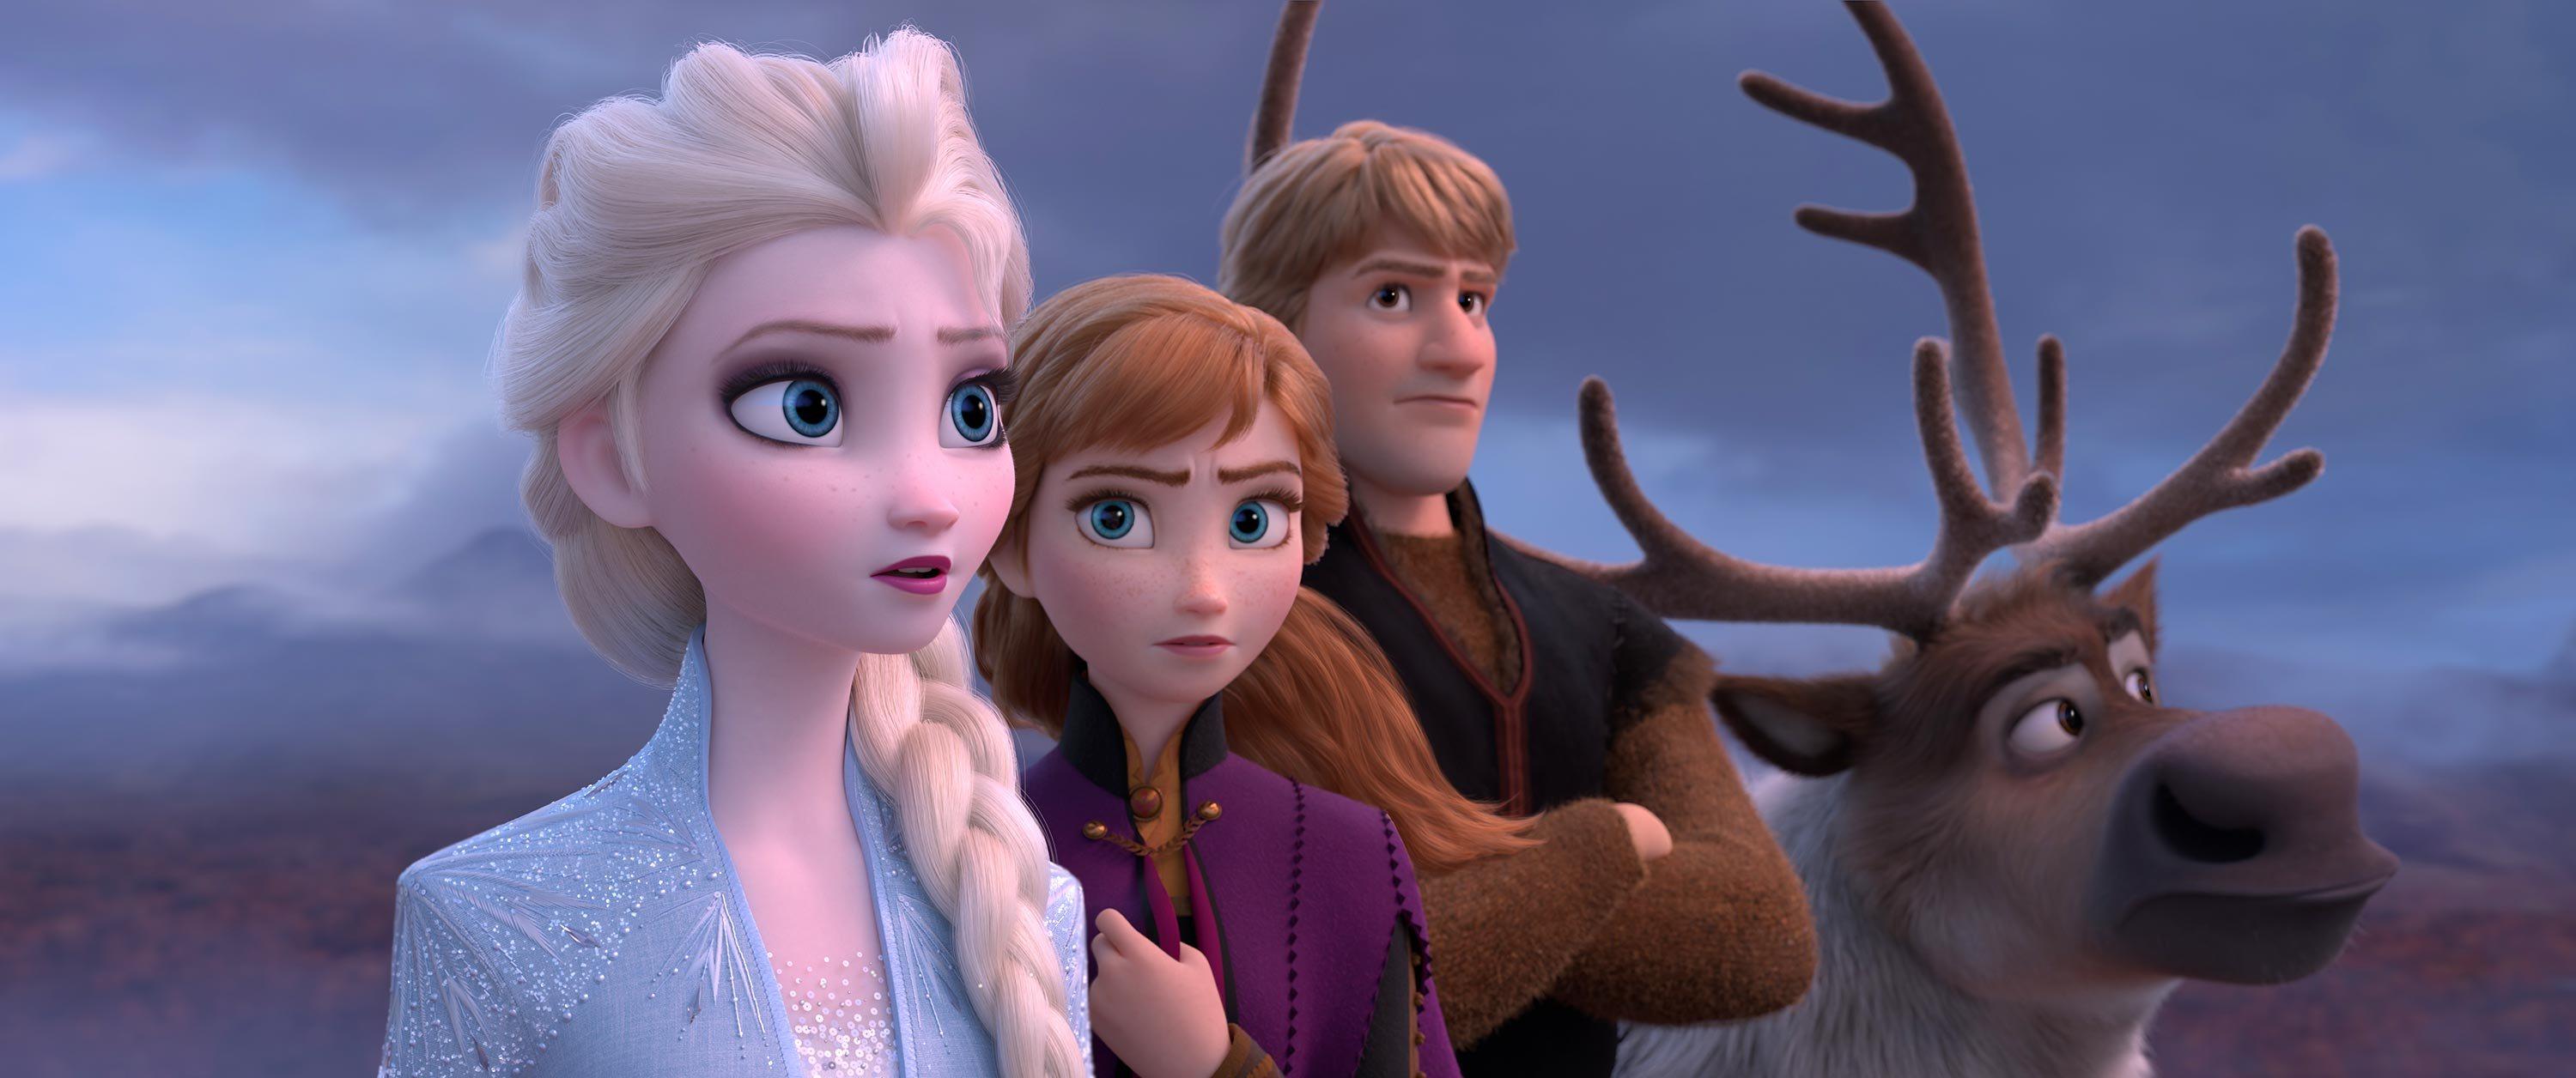 Disney releases Frozen 2 teaser with Kristen Bell, Idina